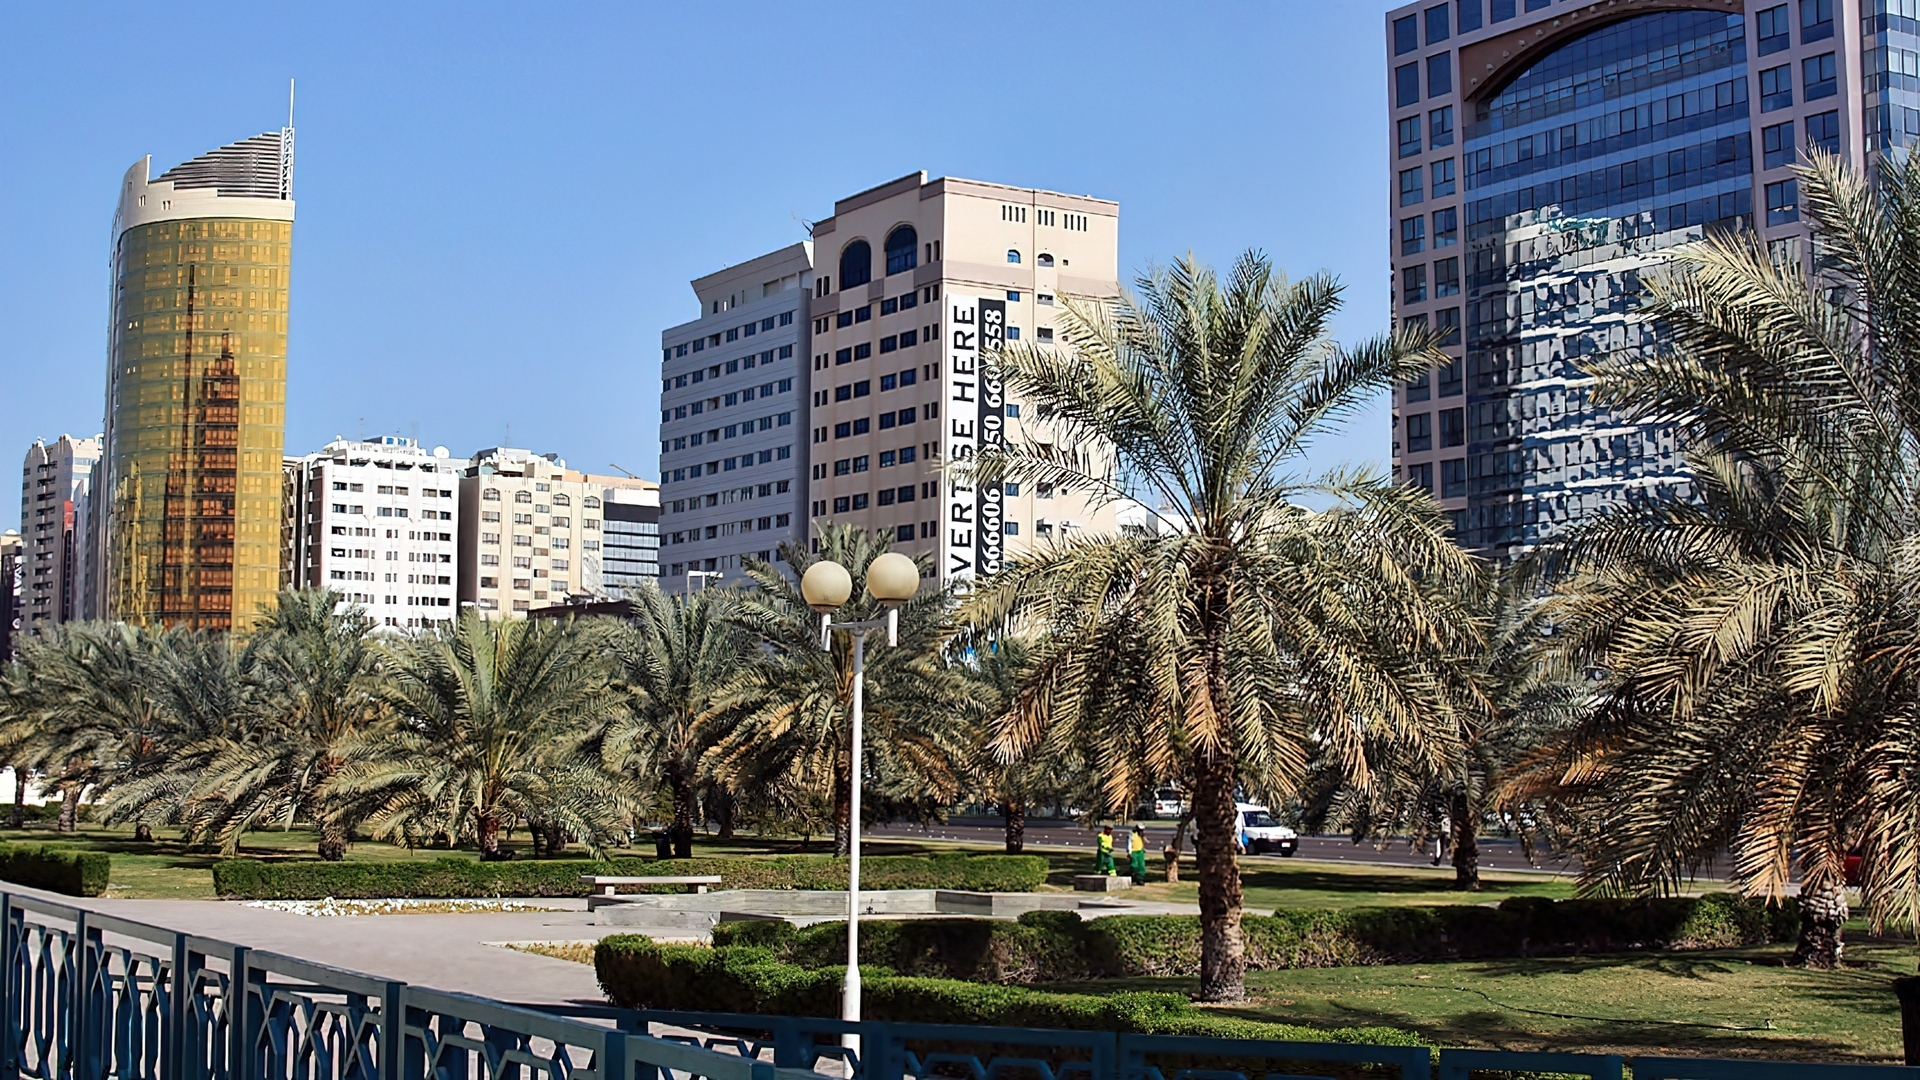 Drapacze, Chmur, Skwer, Palmy, Fragment, Miasta, Abu Dhabi